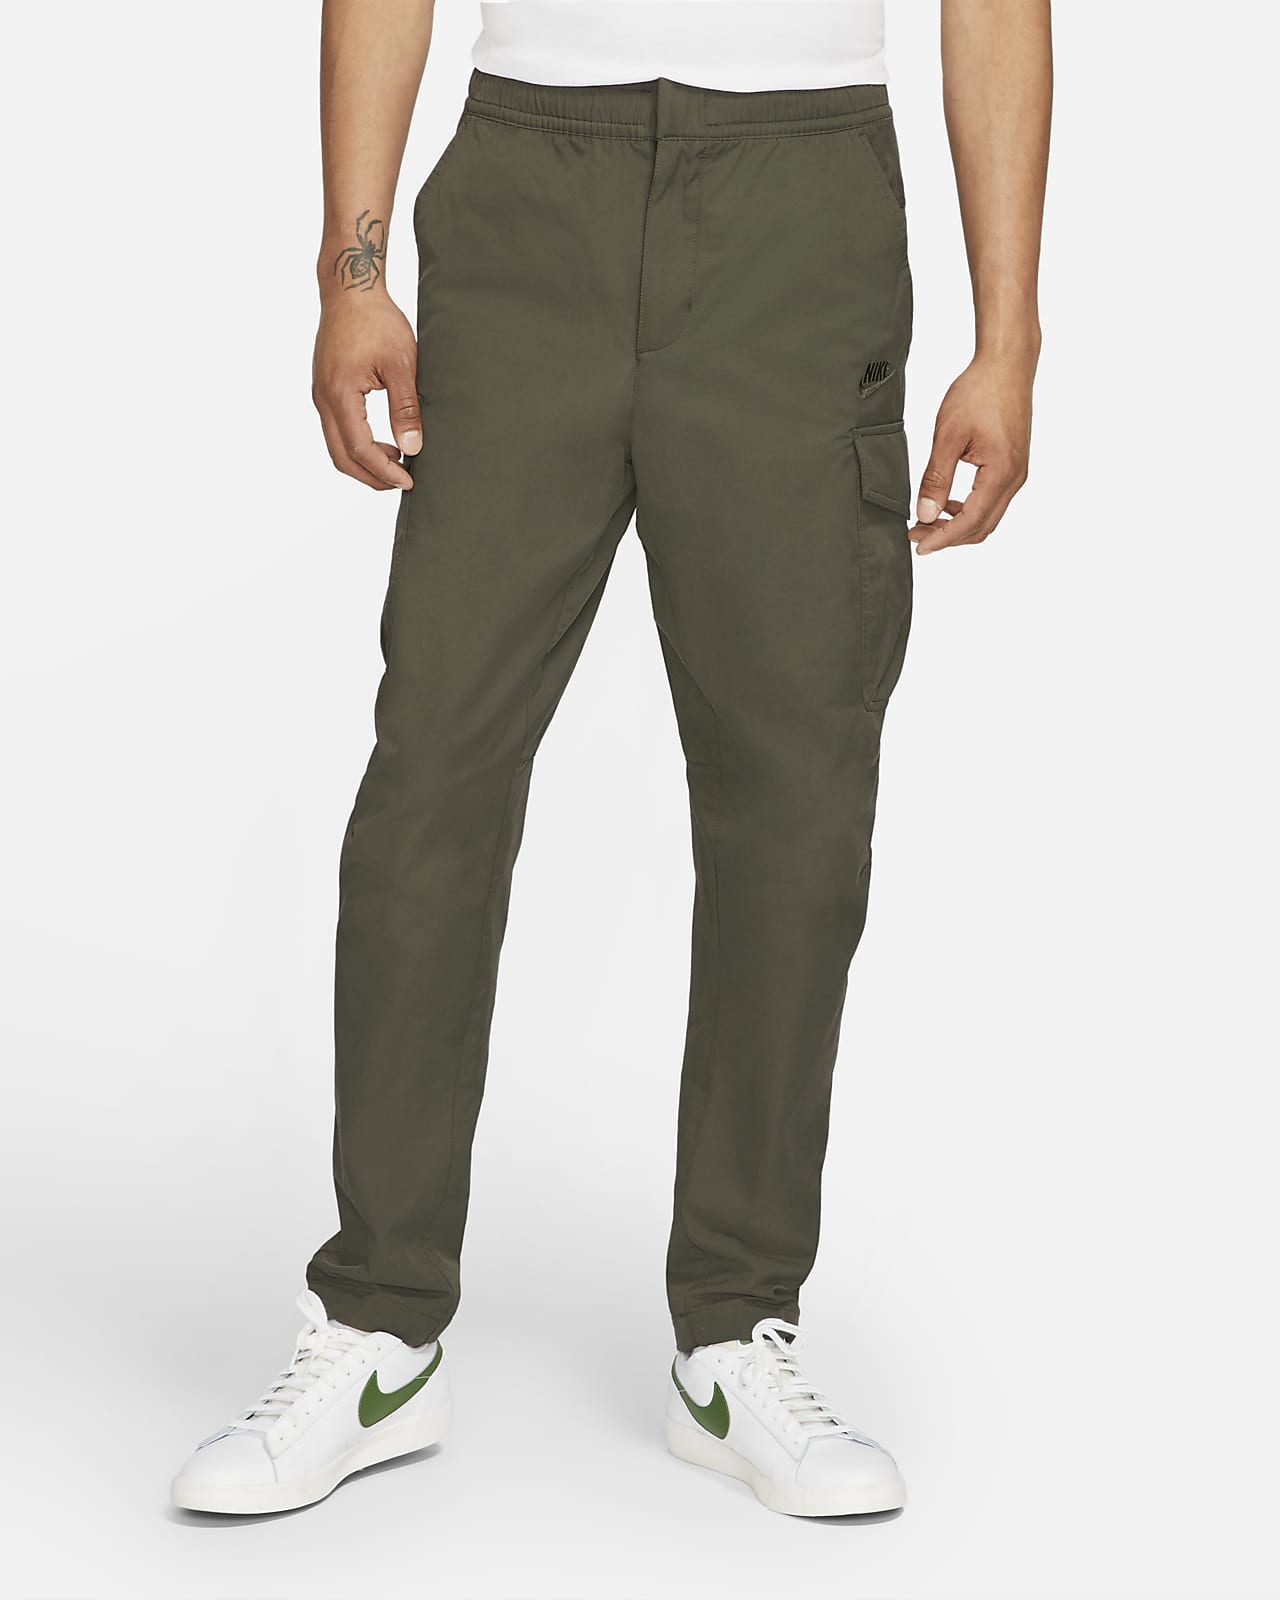 Pants cargo funcionales sin forro para hombre Nike Sportswear